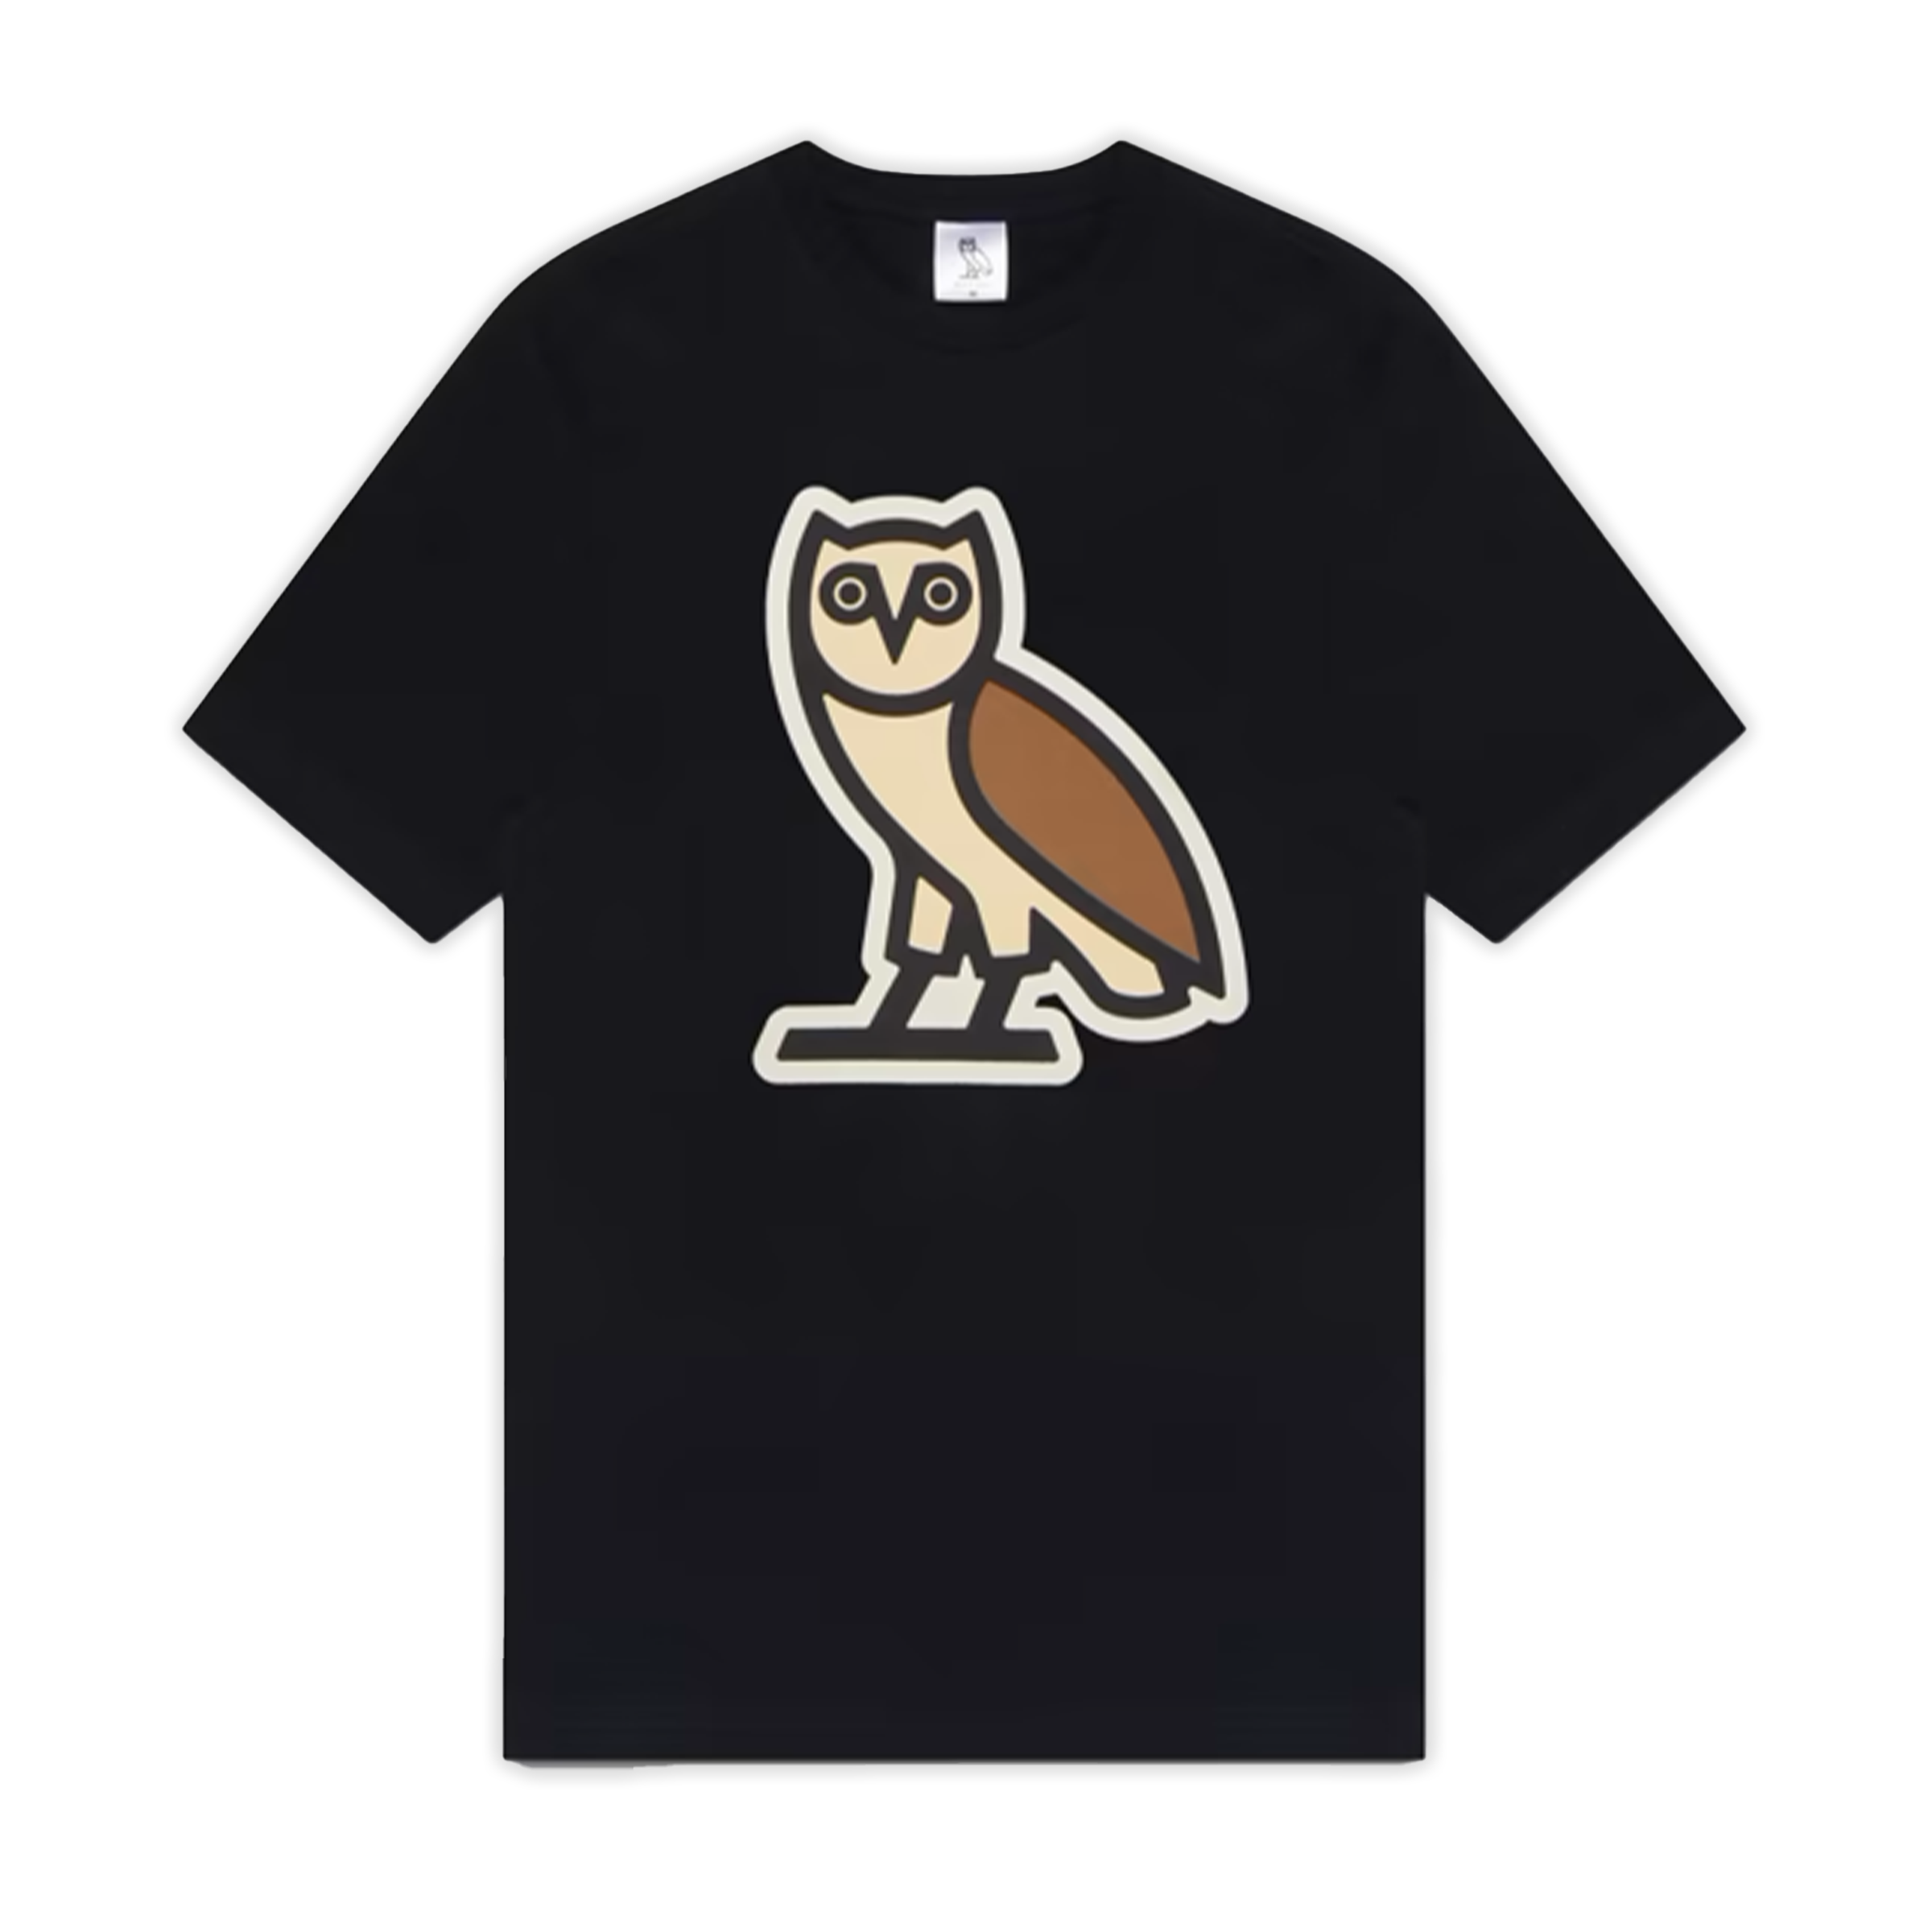 OVO "Bubble Owl" - T Shirt